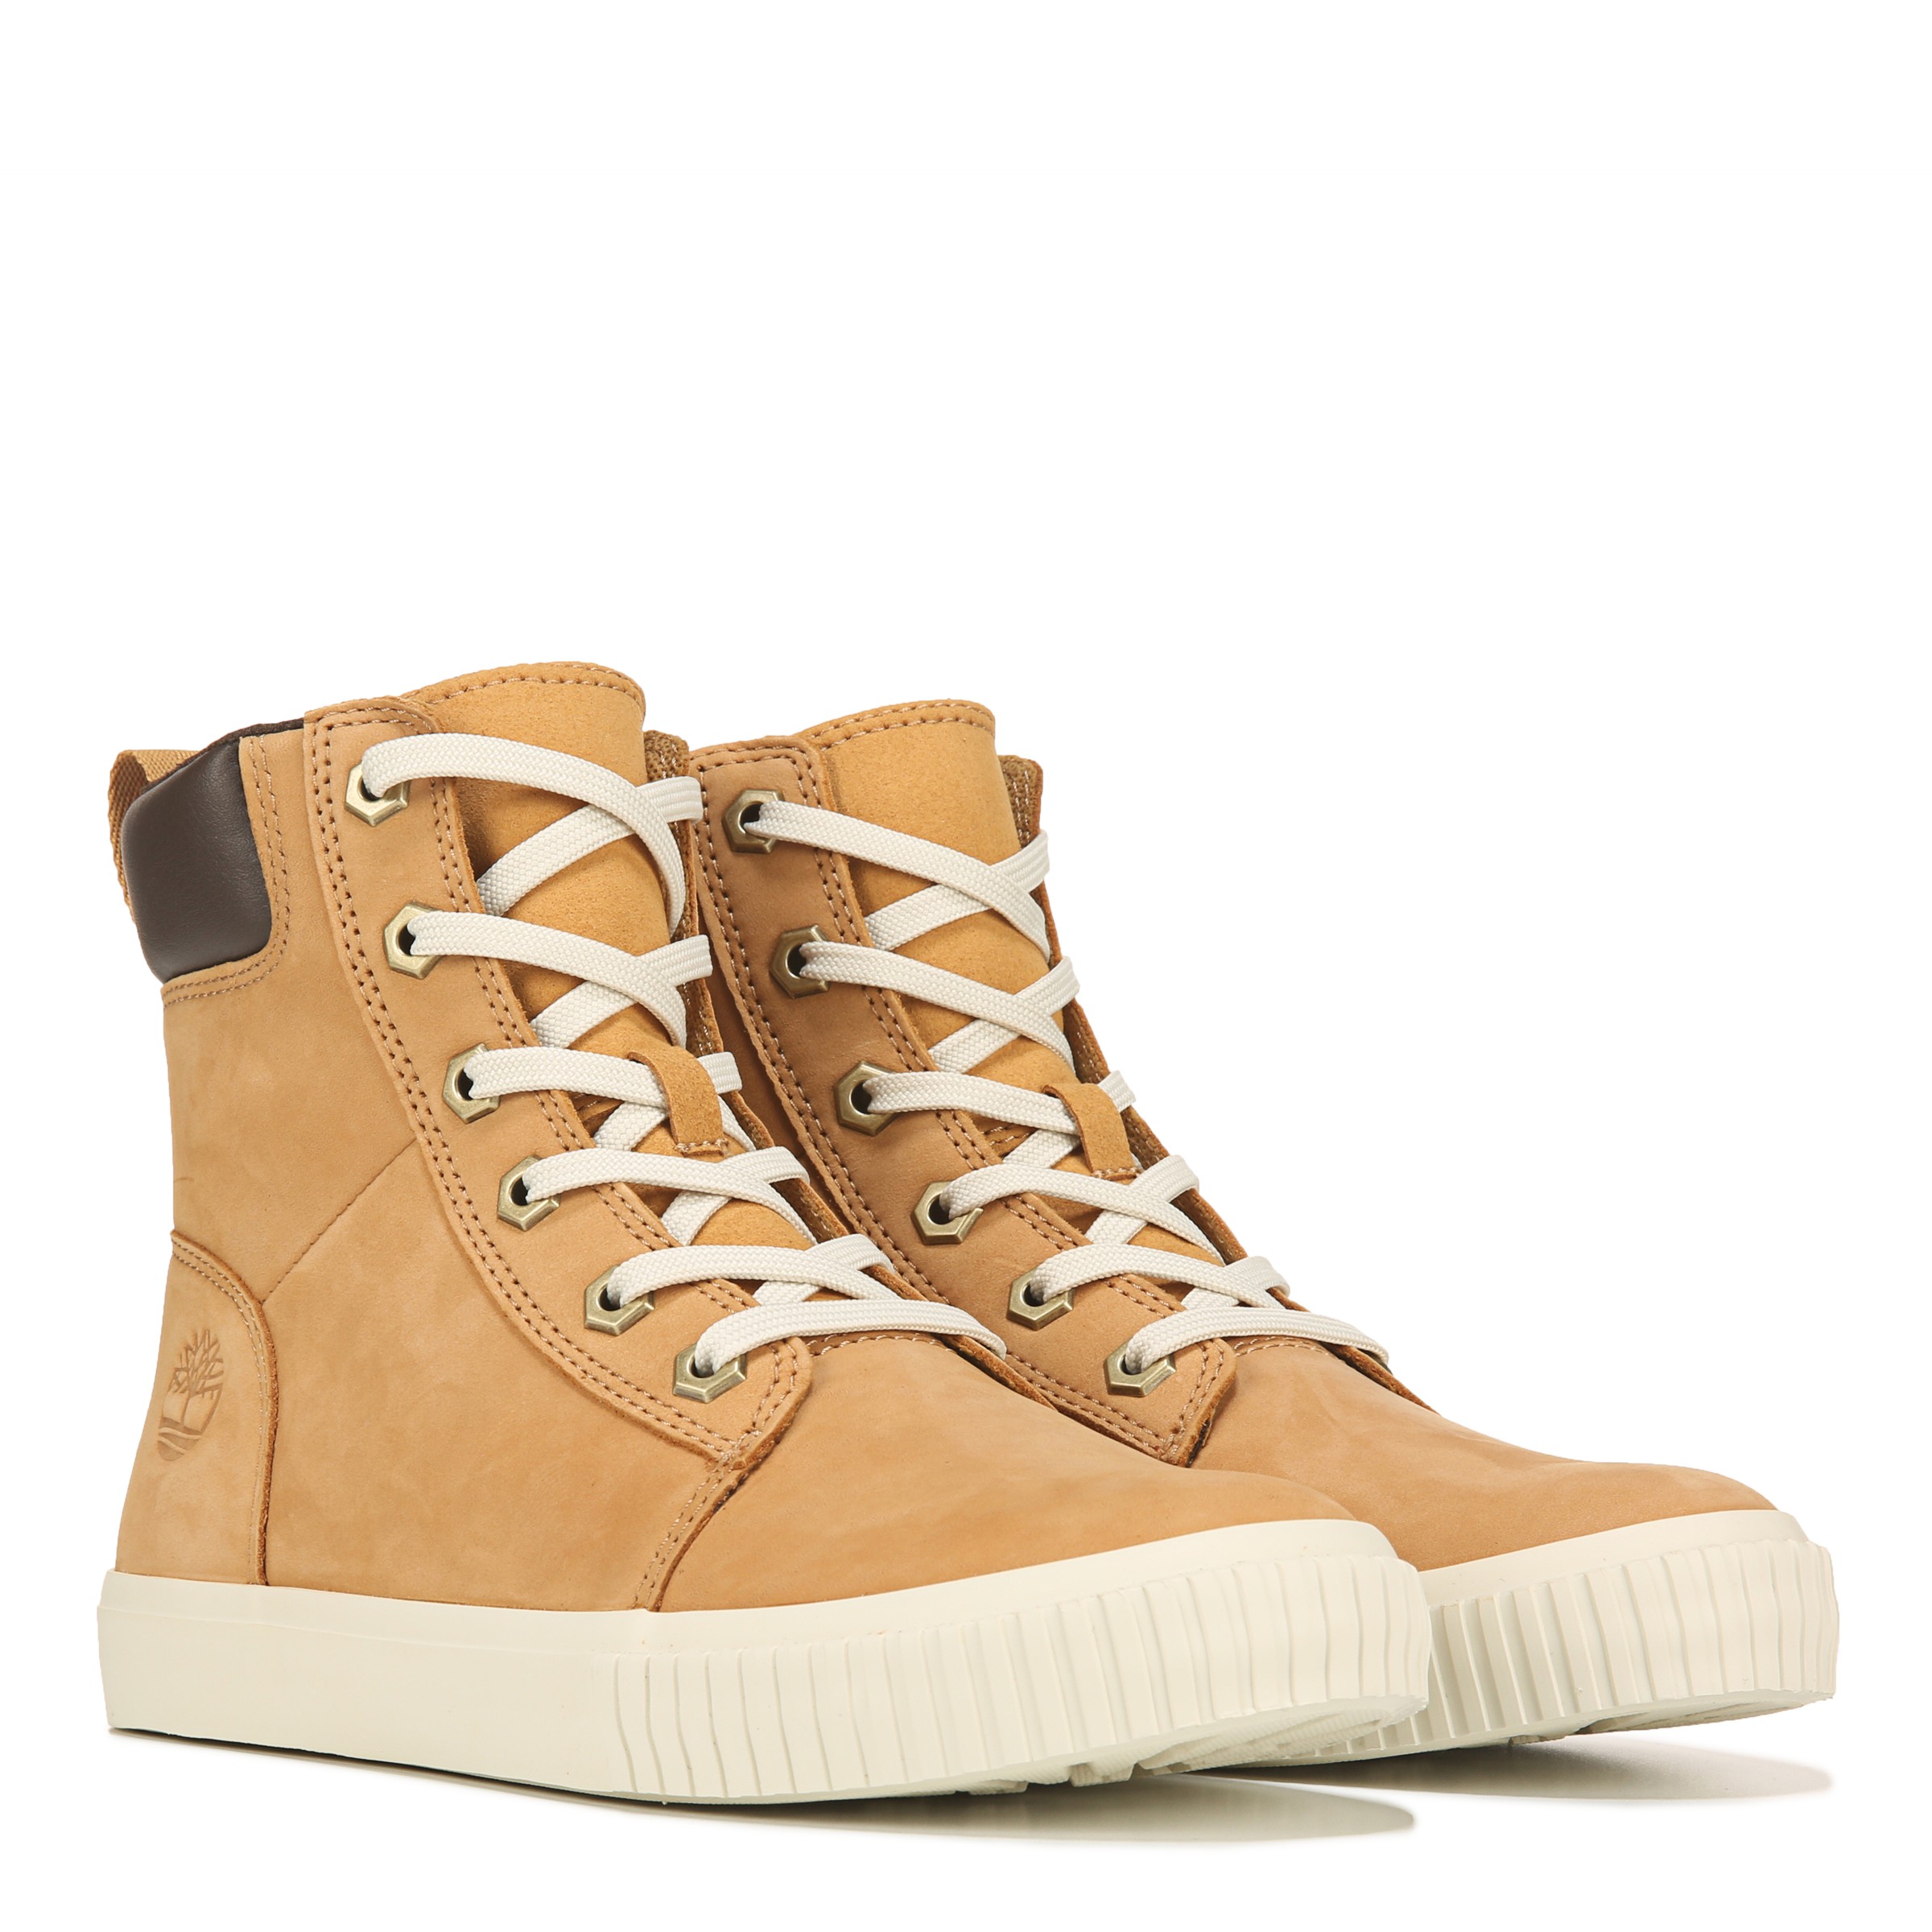 Womens Timberland Sneaker Boots | eBay